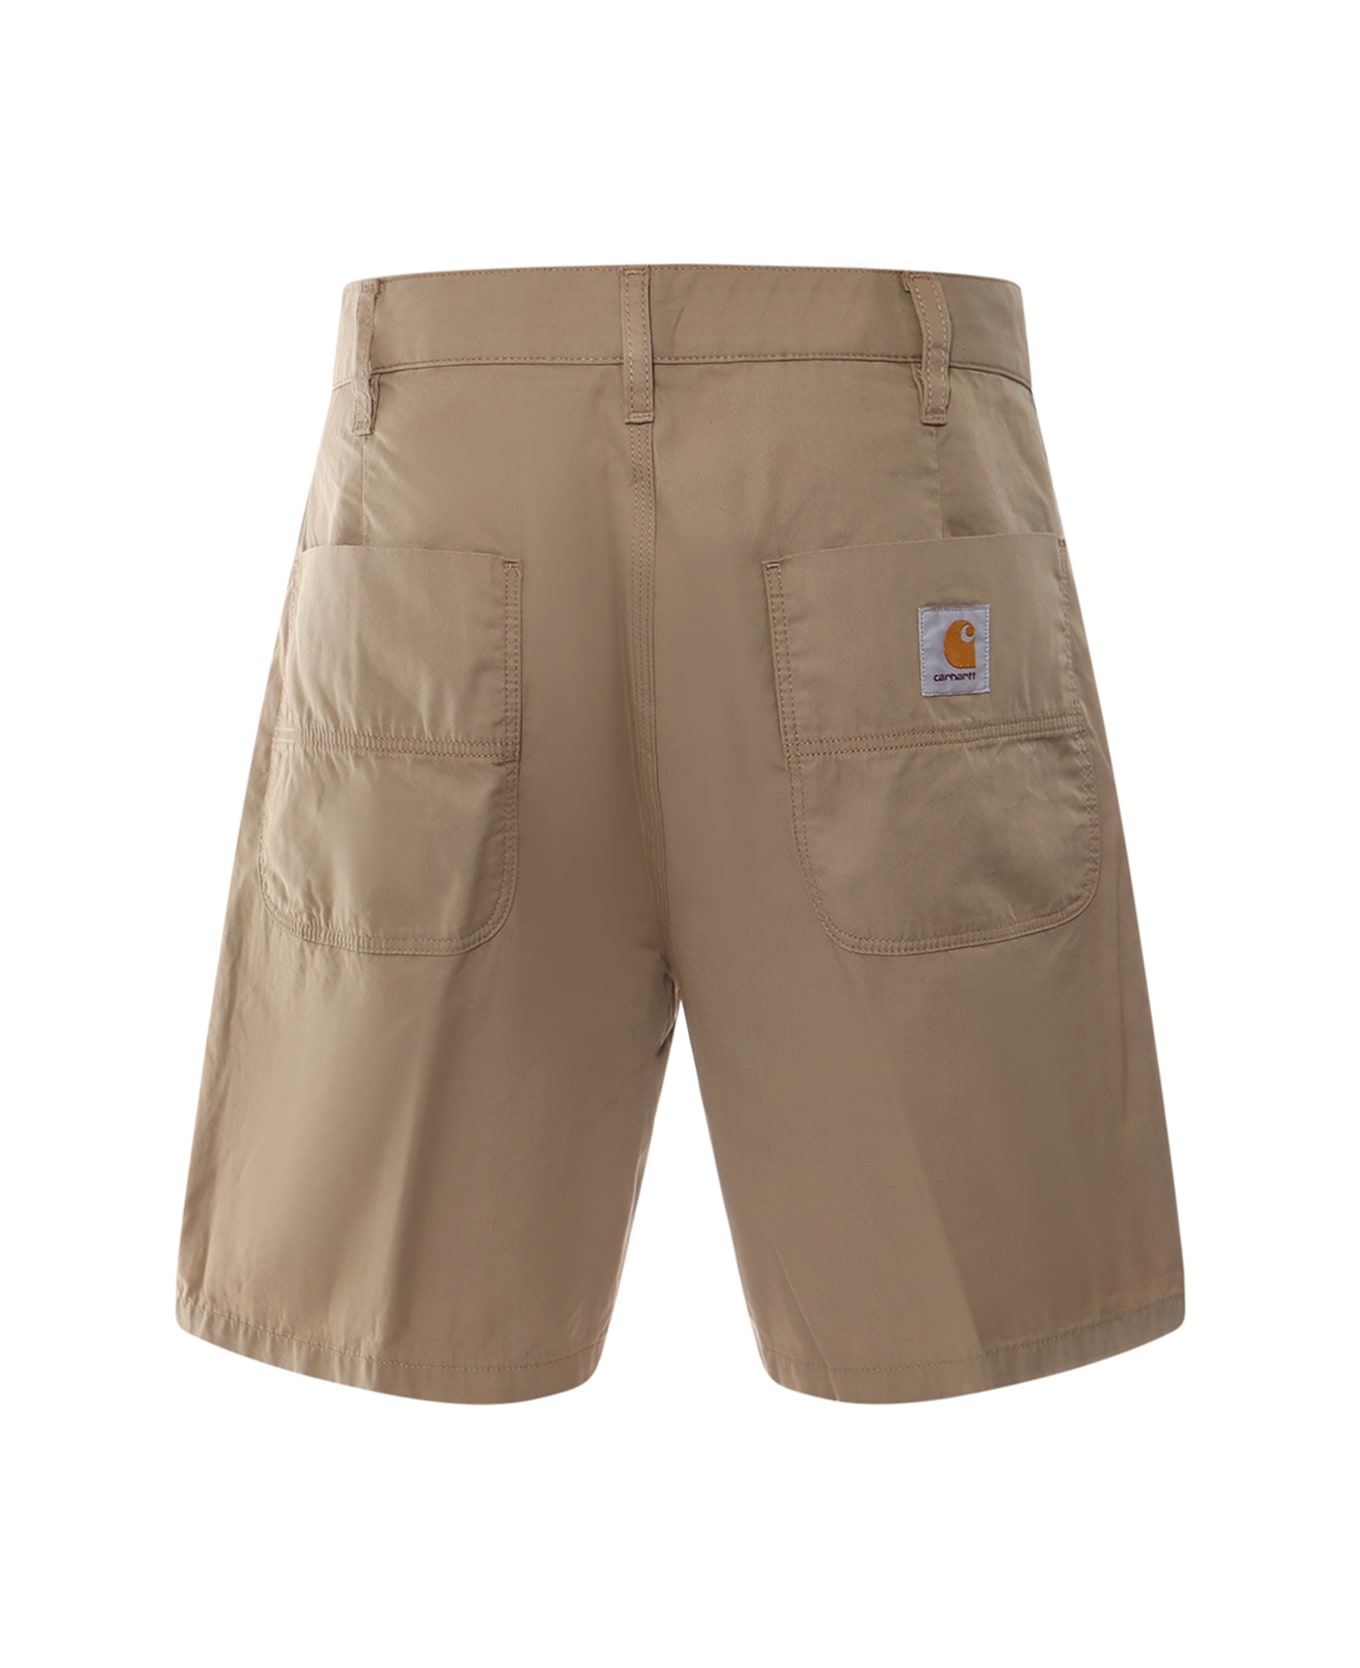 Carhartt Bermuda Shorts - Beige ショートパンツ